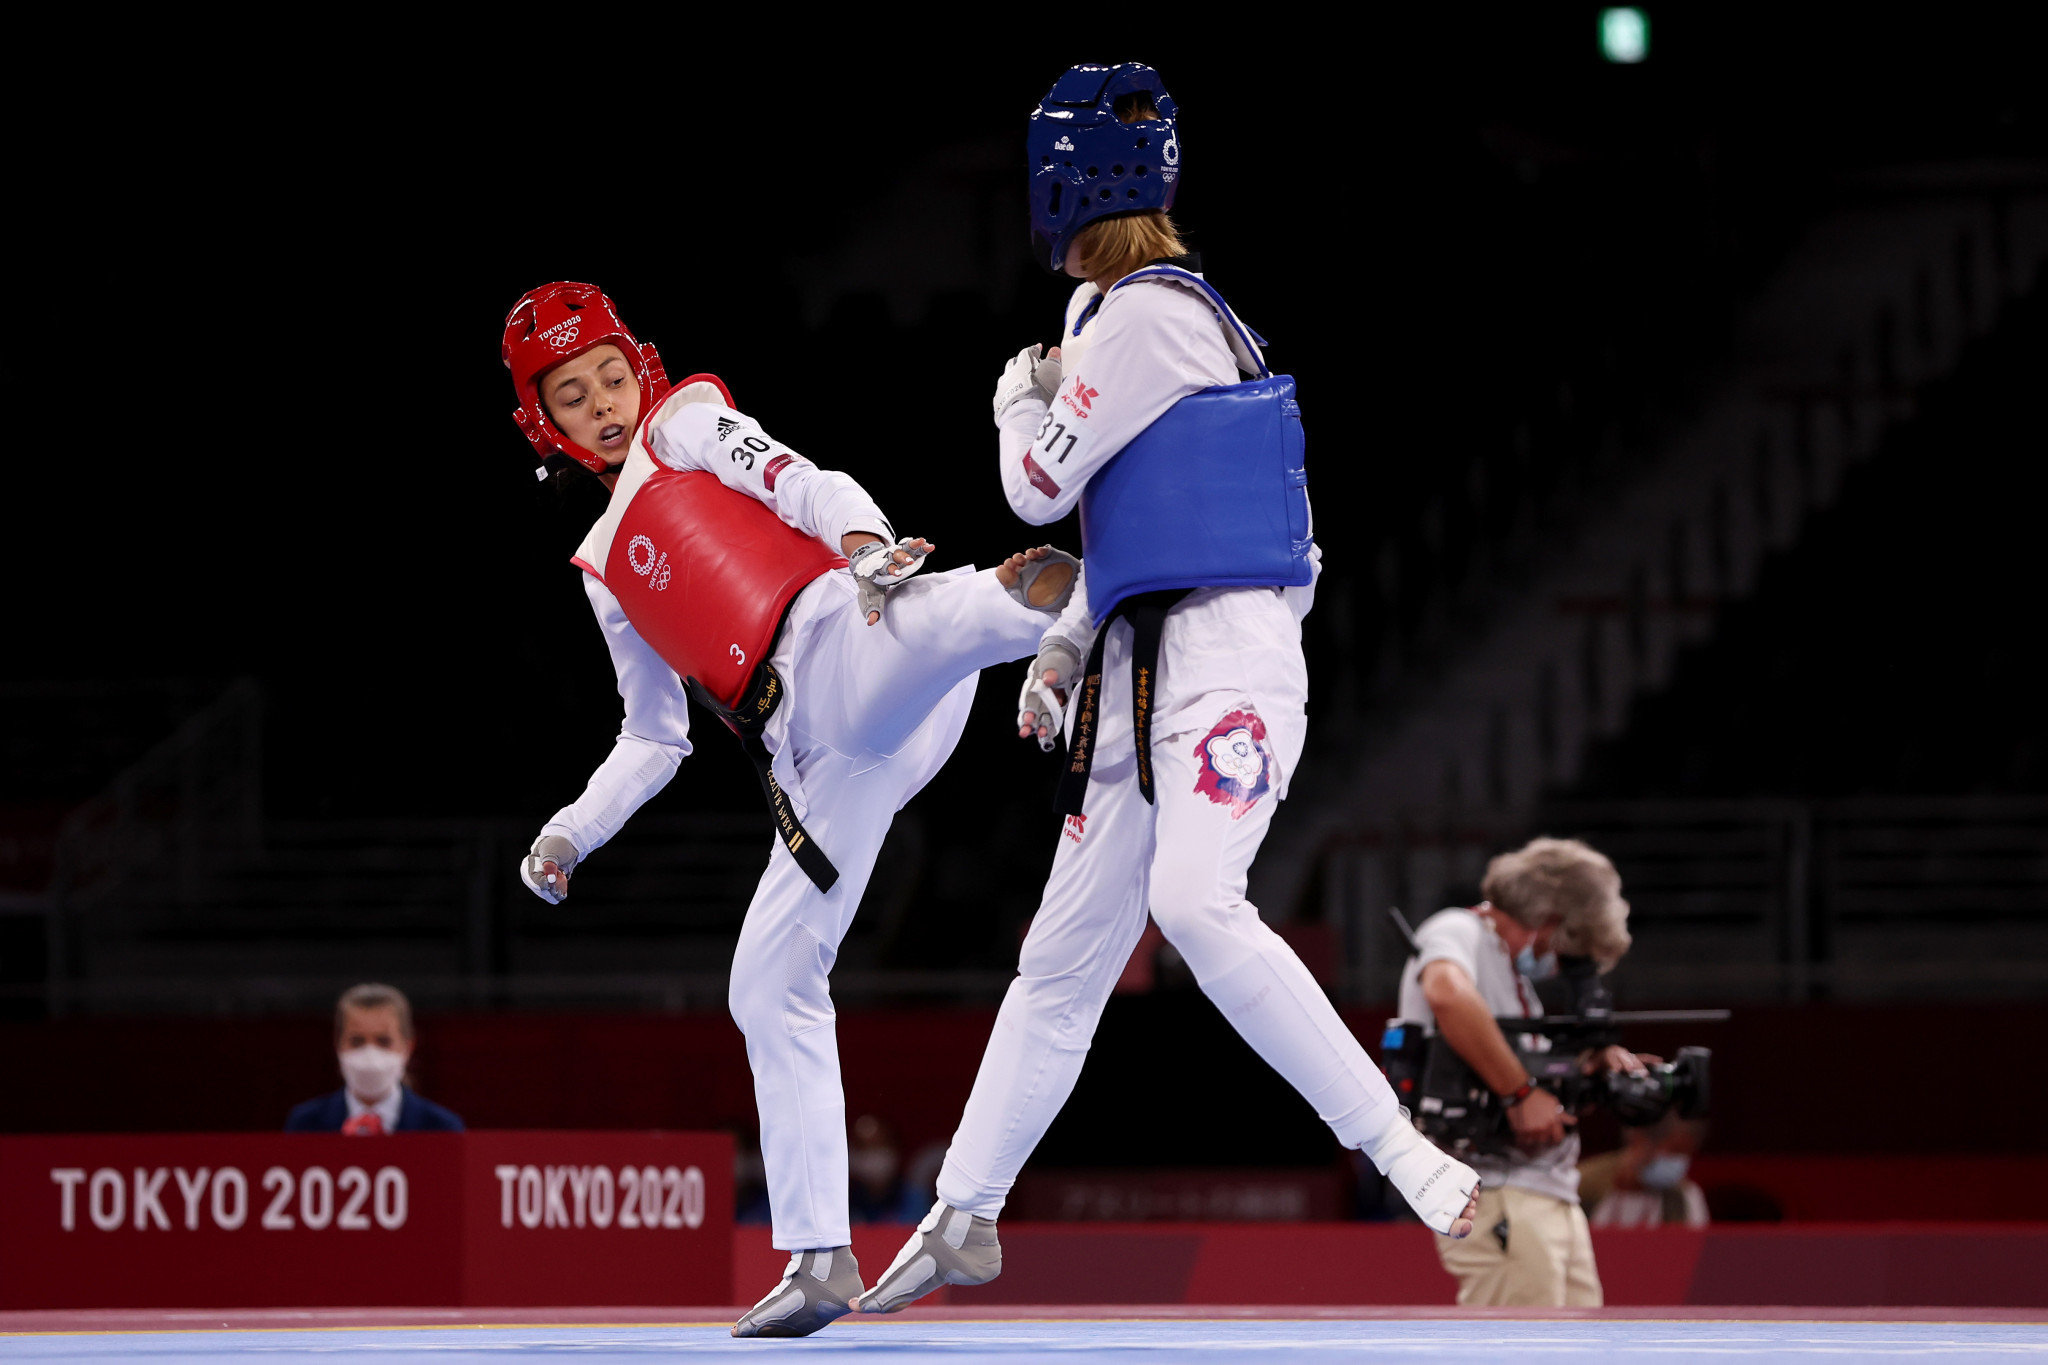 Taekwondo Canada director "proud" of "inspirational" Olympic debutants Yong and Park